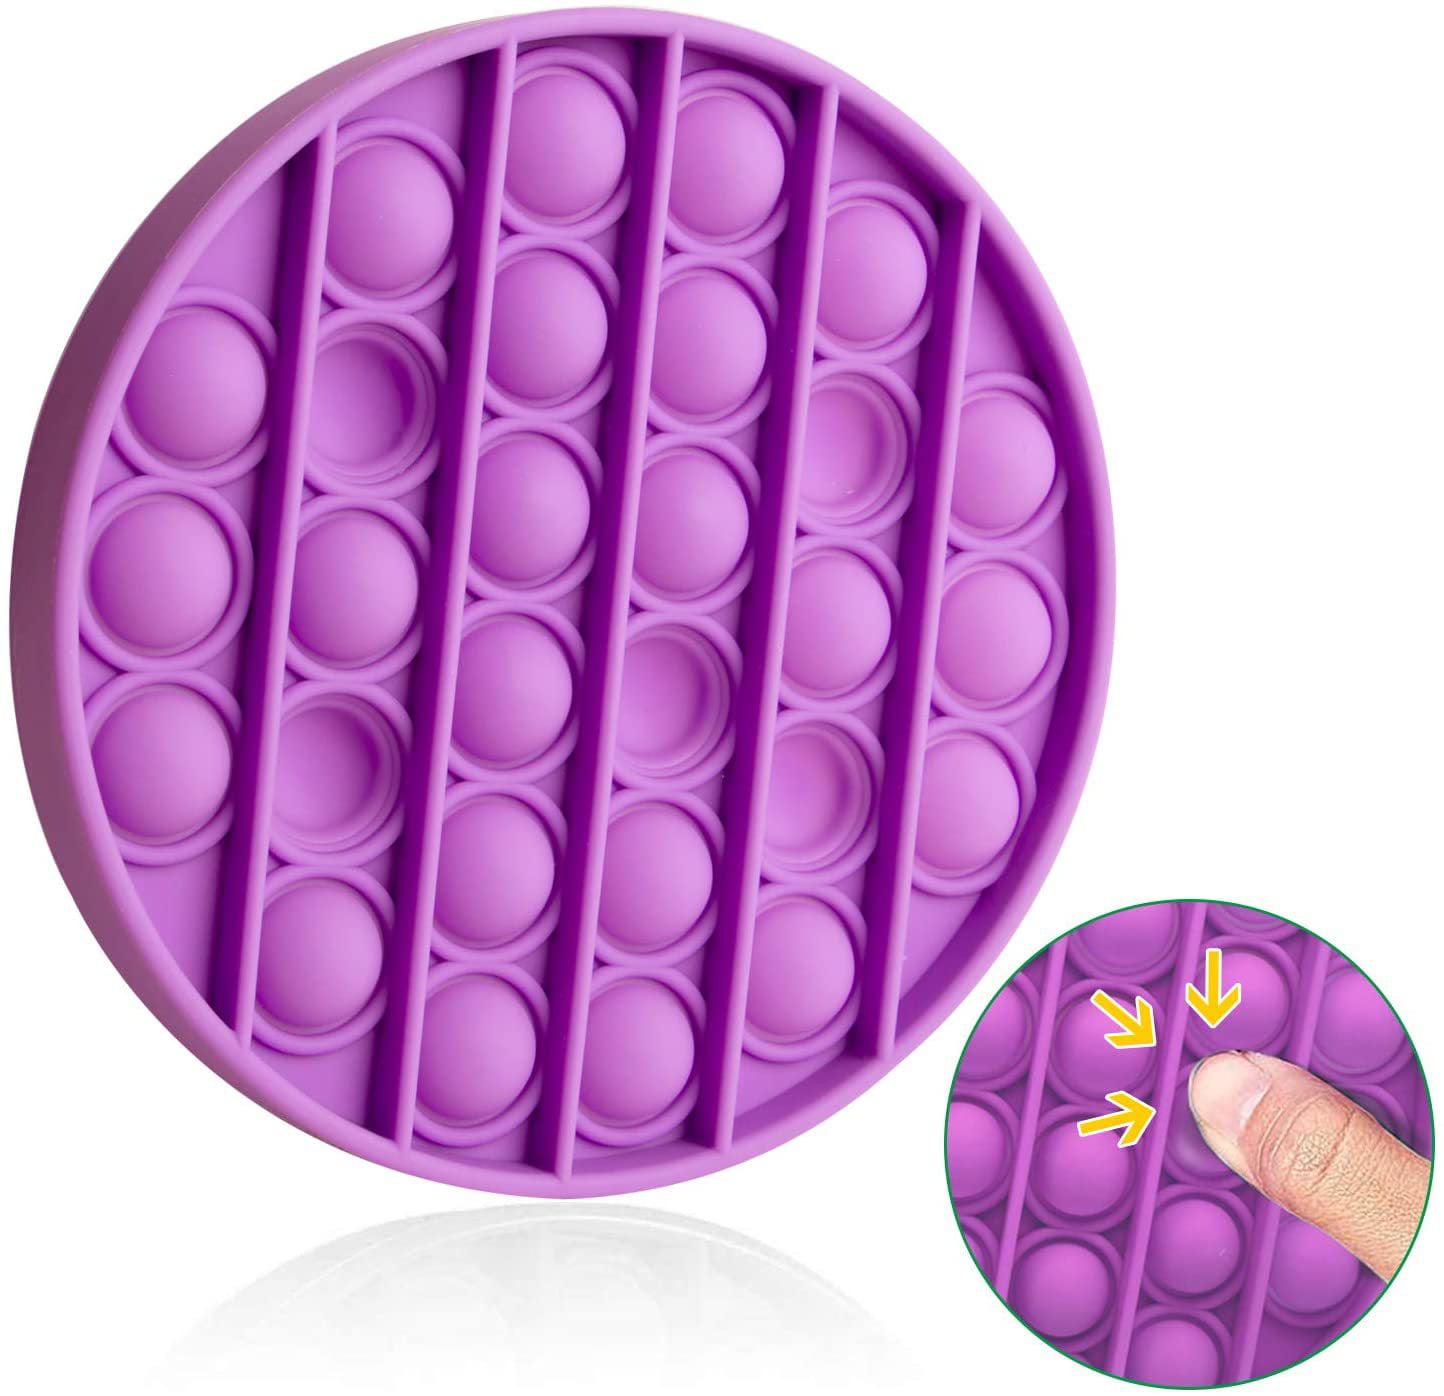 Push Pop for it Bubble Snappers Fidget Sensory Stress Relief Toy Autism Needs 